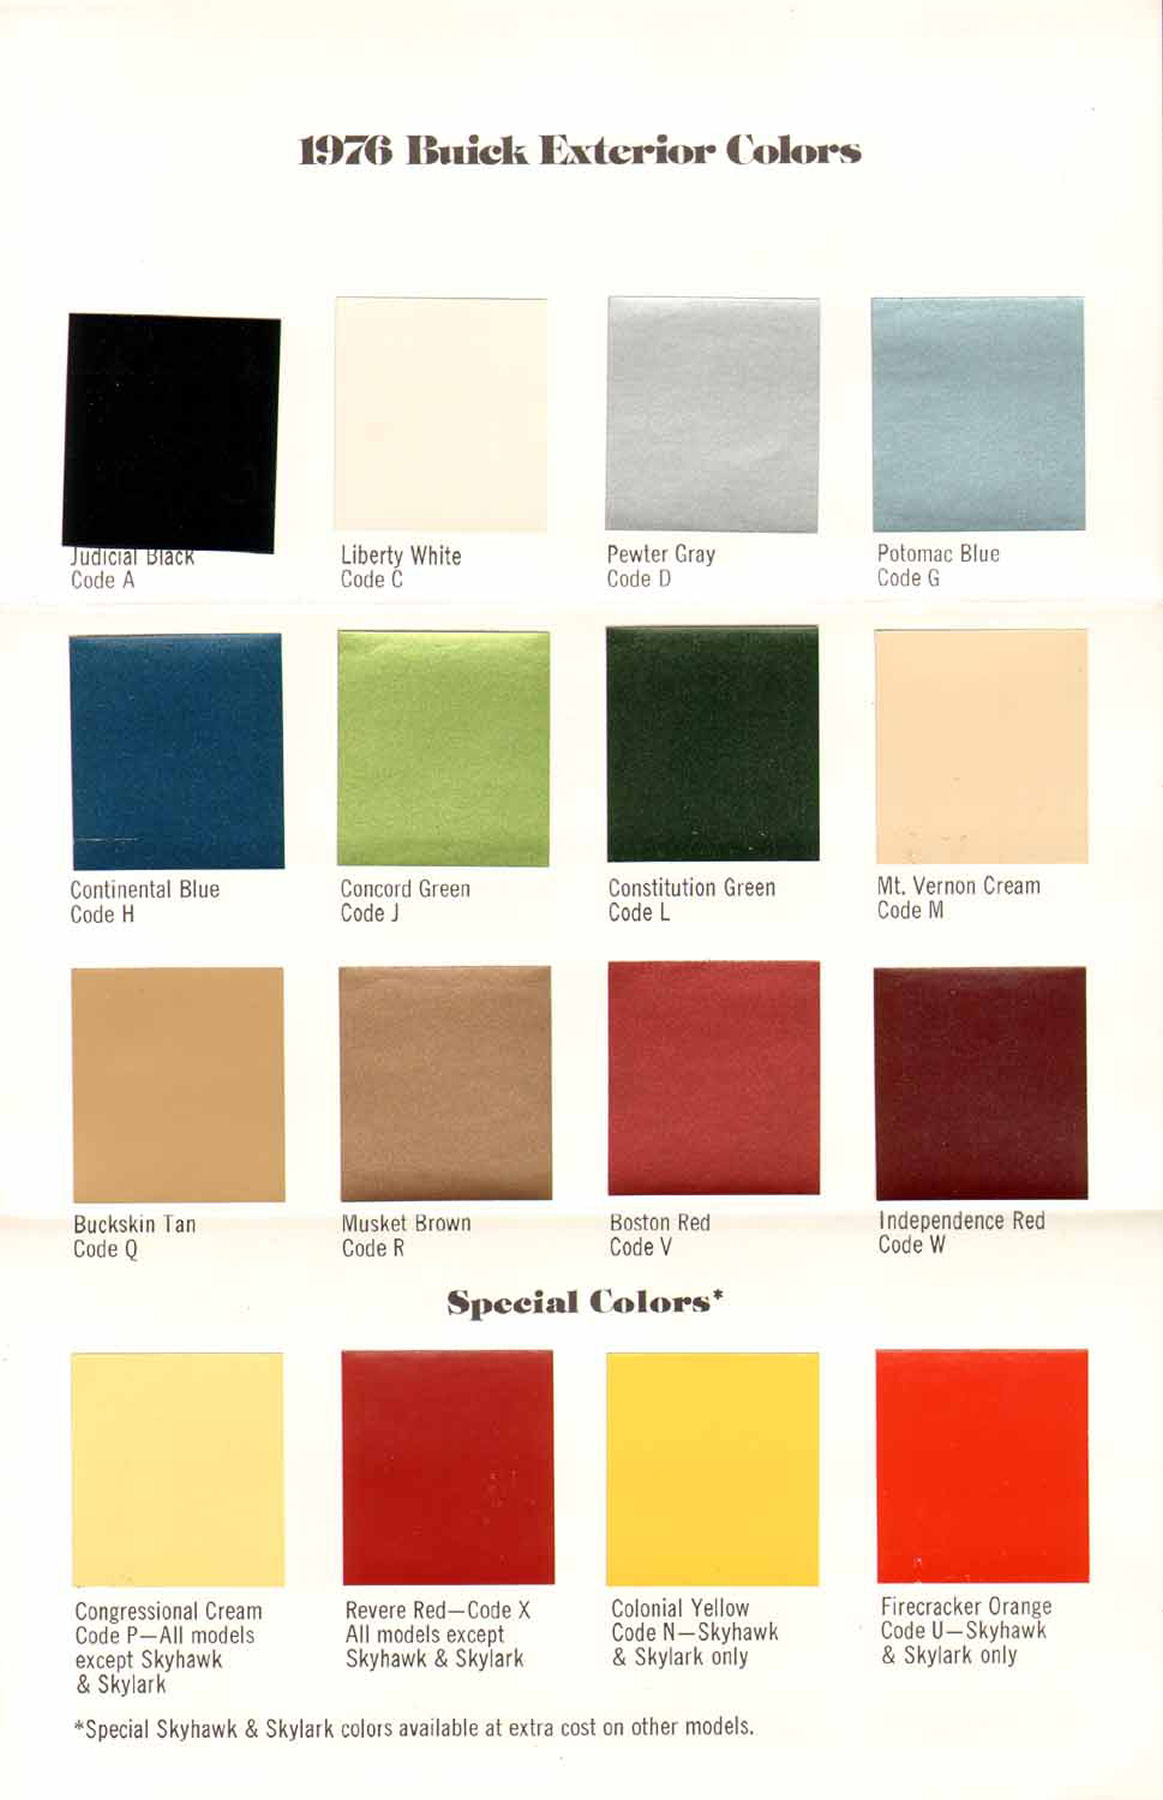 1976 Buick Exterior Colors Chart-02-03-04